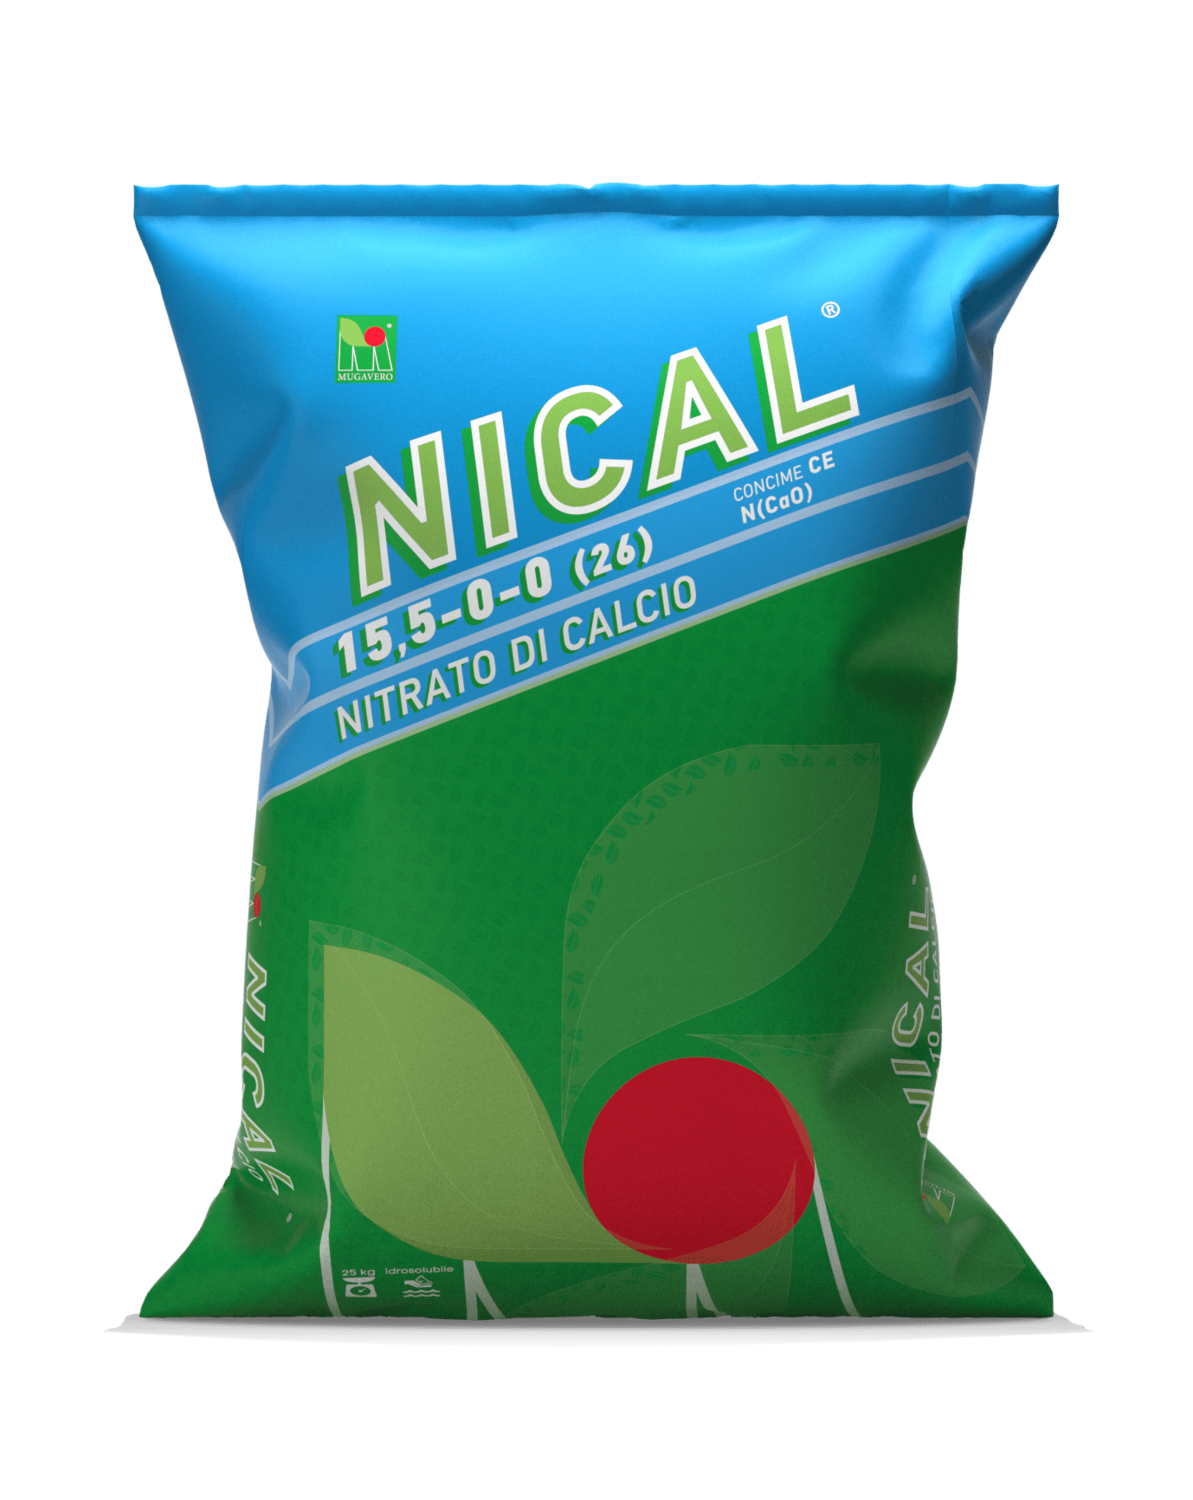 Mugavero - Nical 15,5-0-0 (18,6)